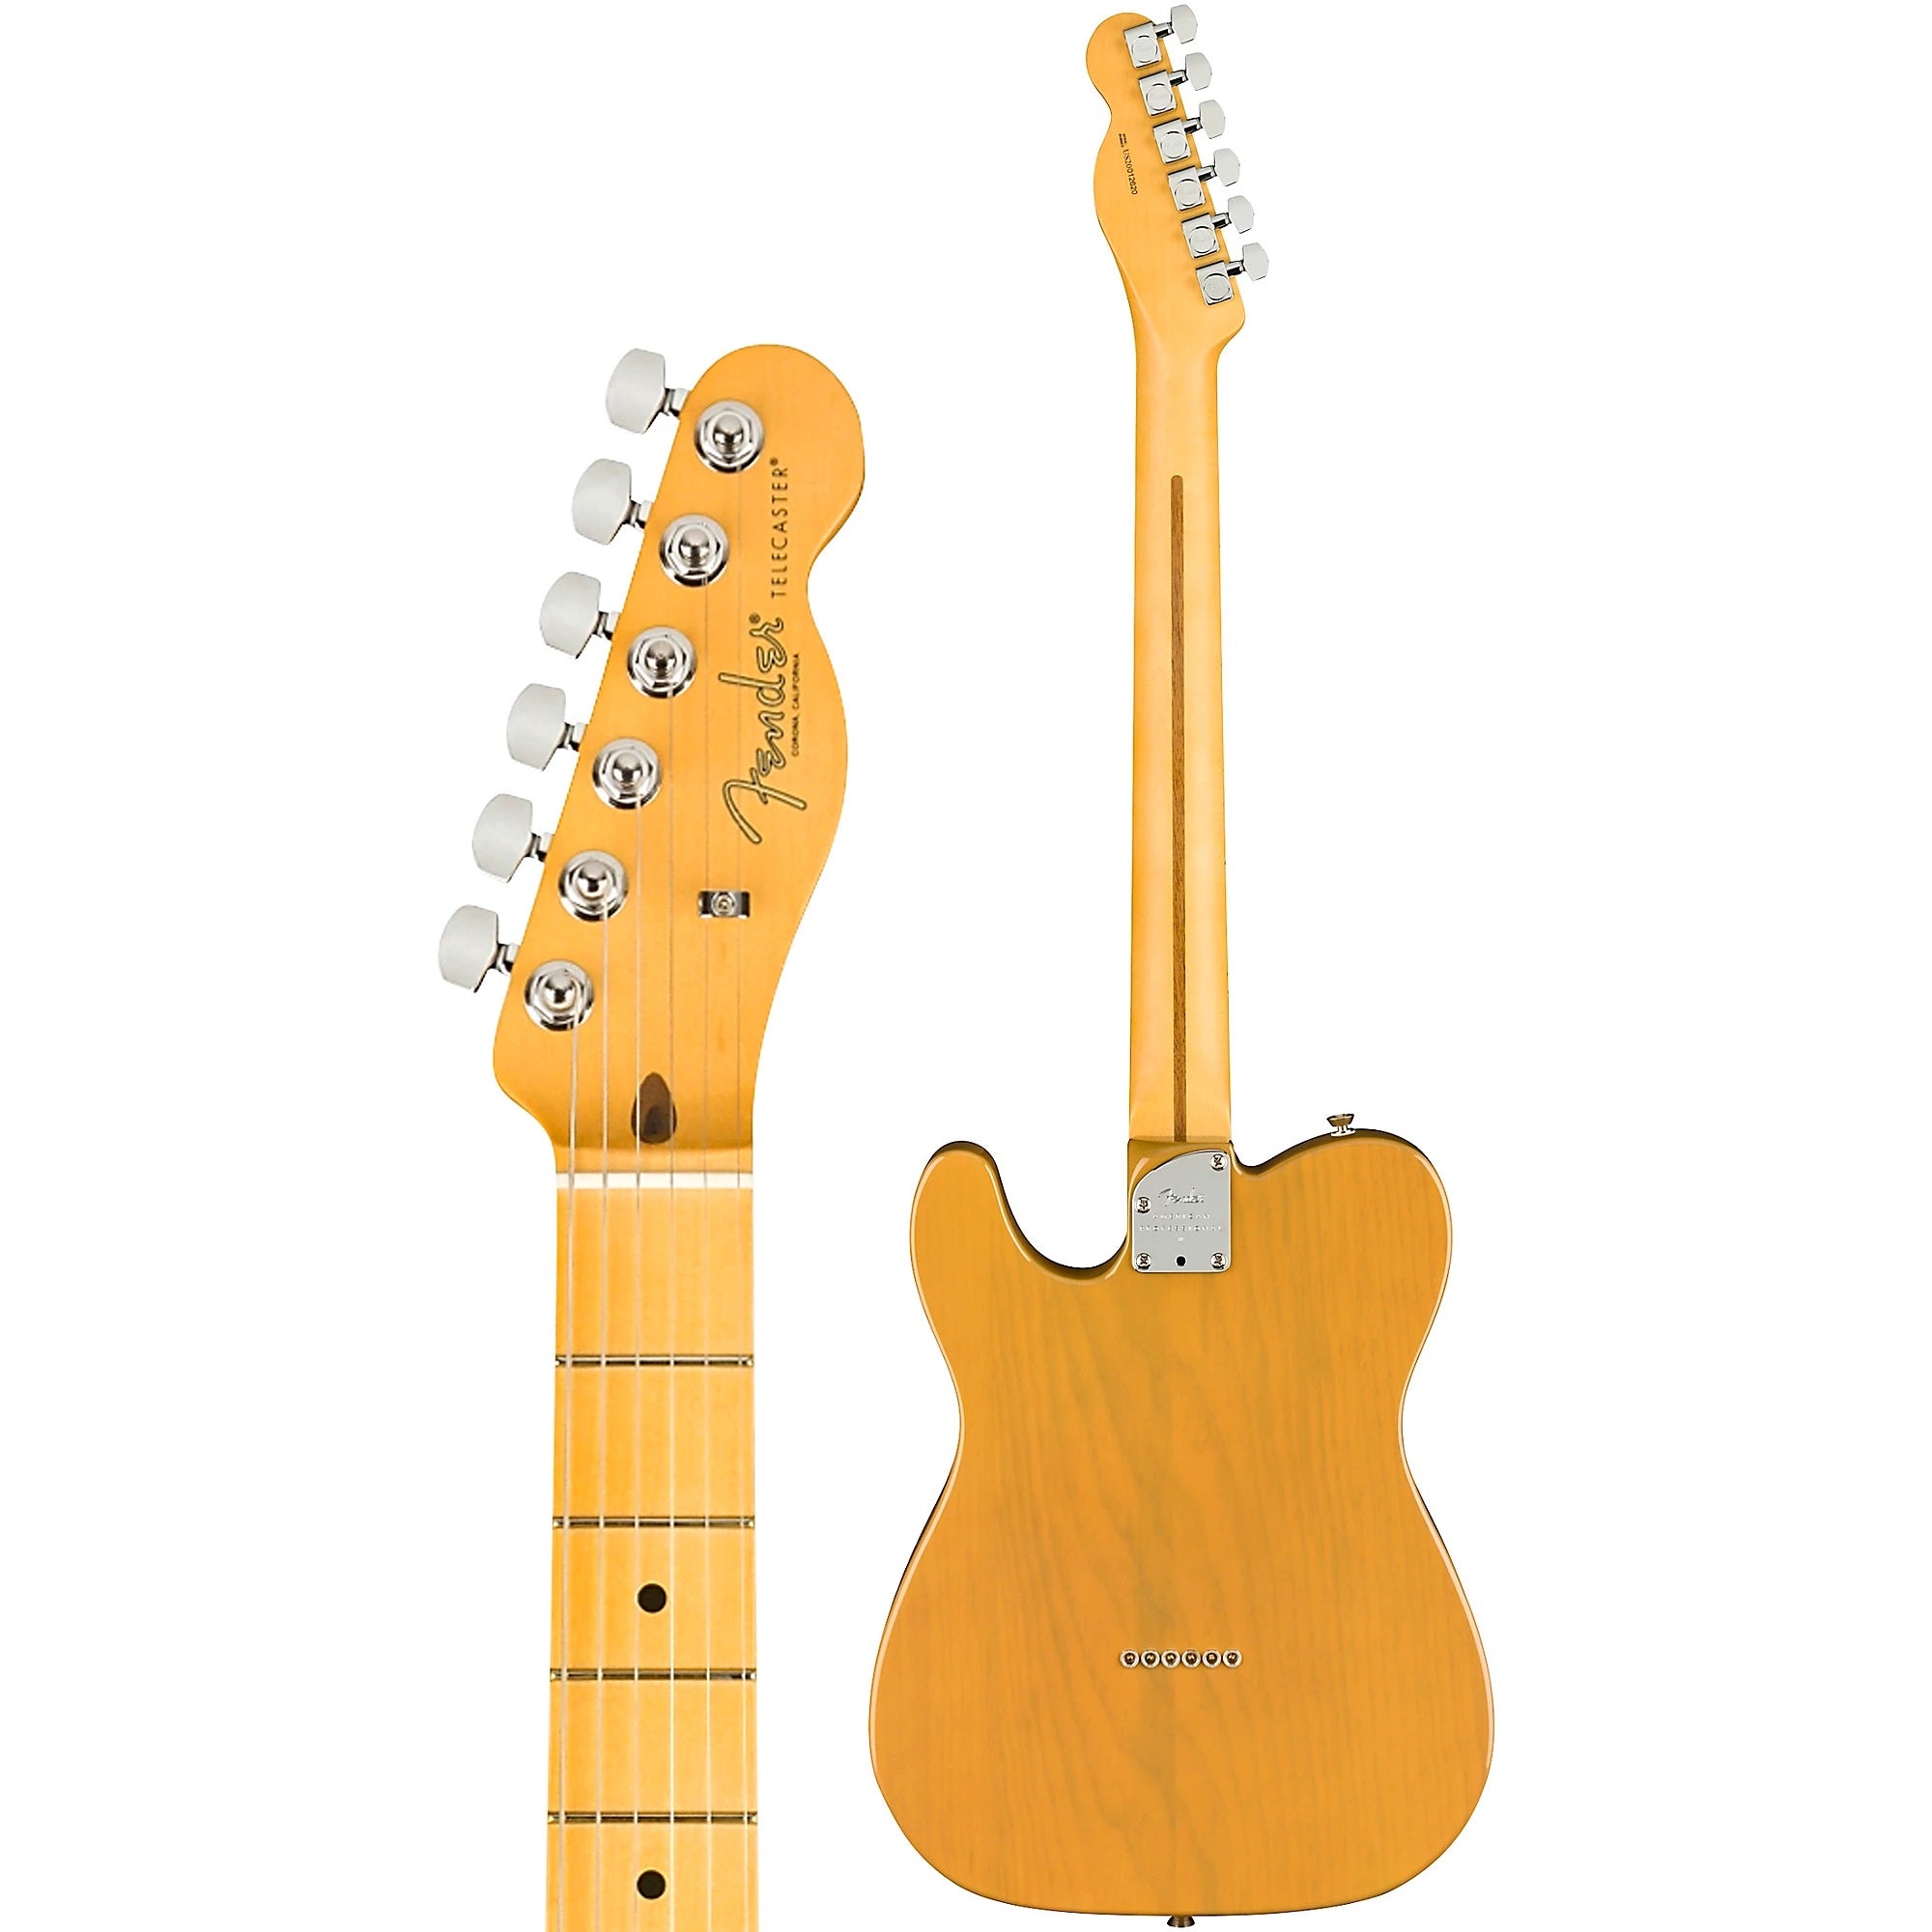 Fender American Professional II Telecaster Electric Guitar - Butterscotch Blonde